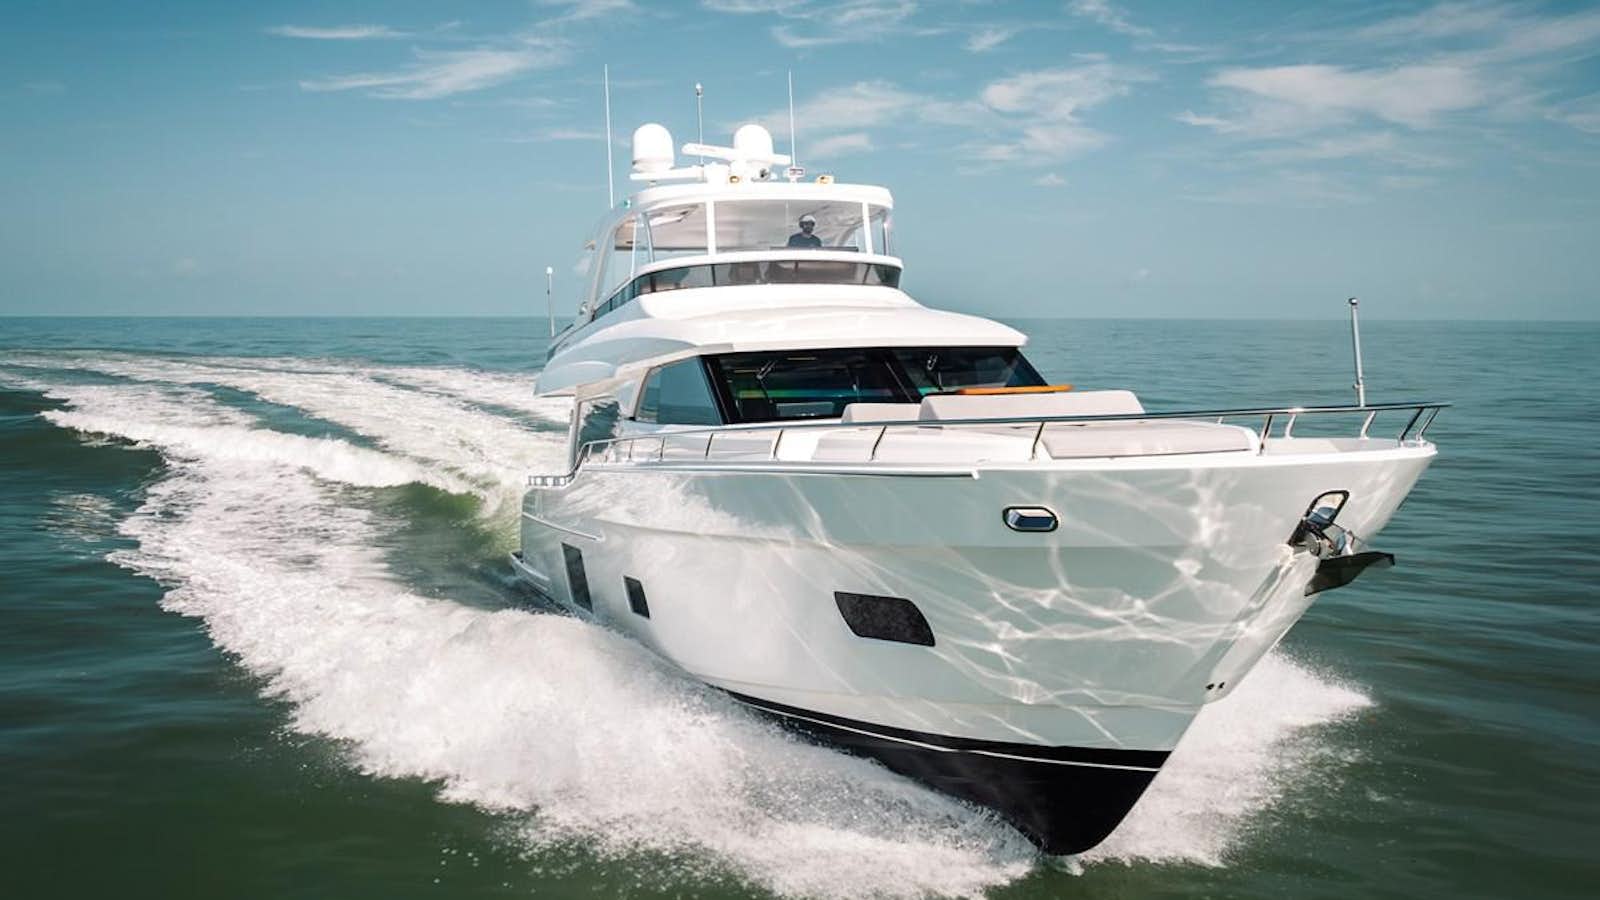 2018 ocean alexander 70e tiresum
Yacht for Sale